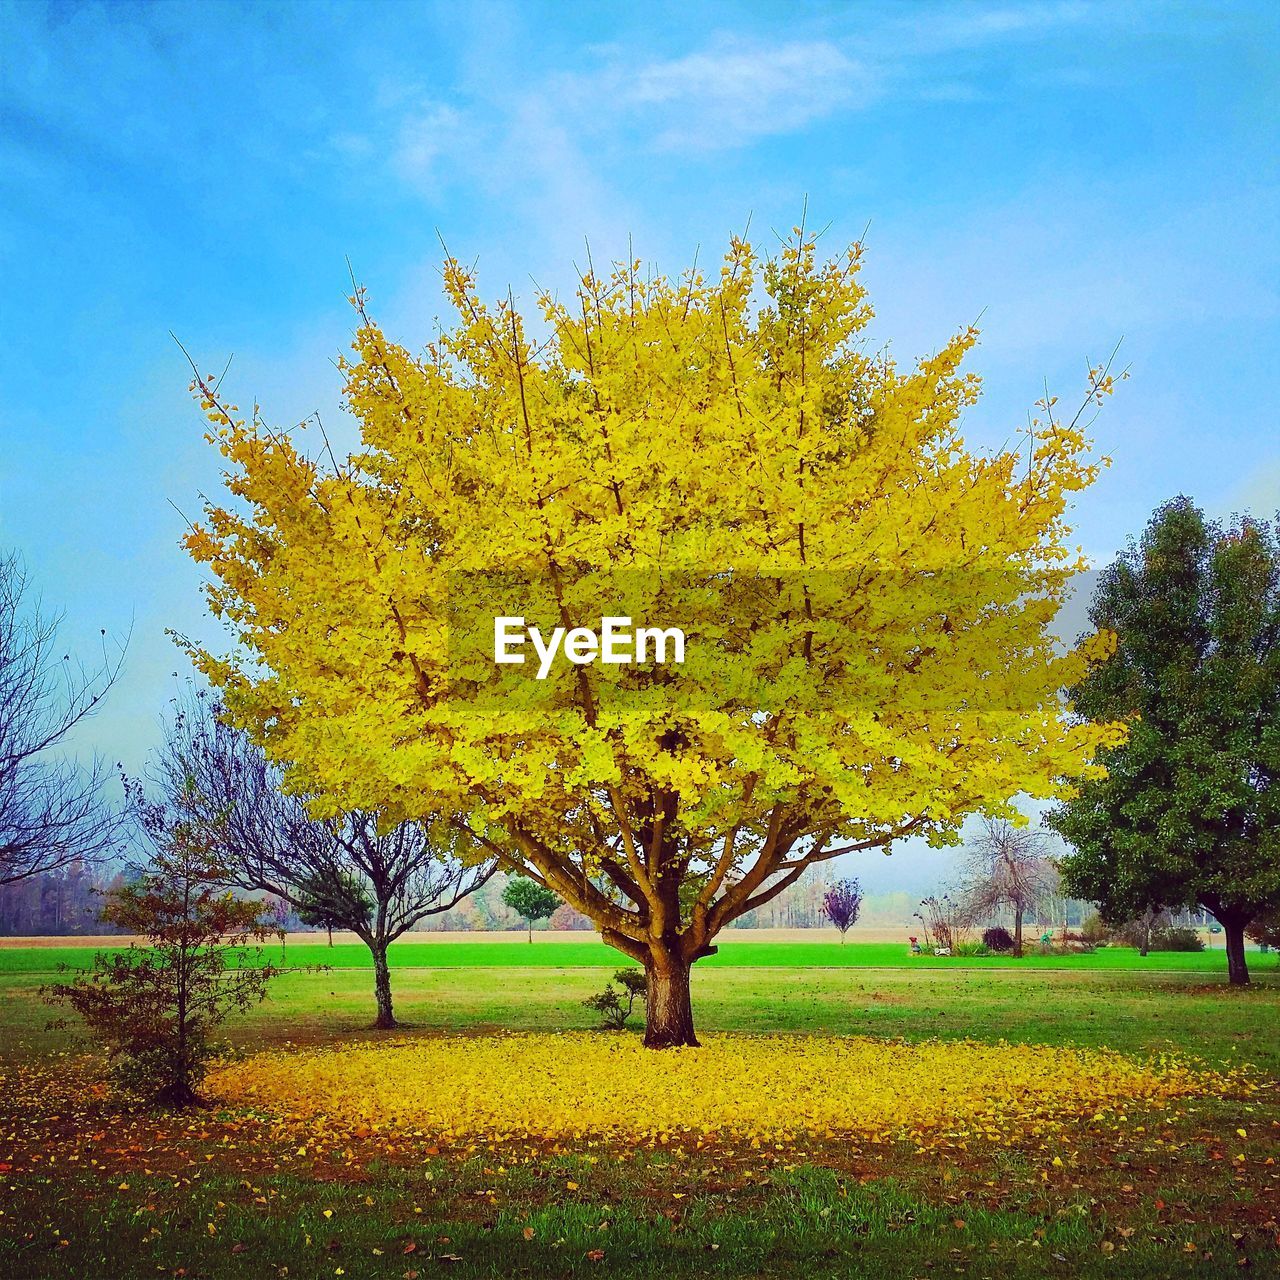 Tree in yellow autumn foliage